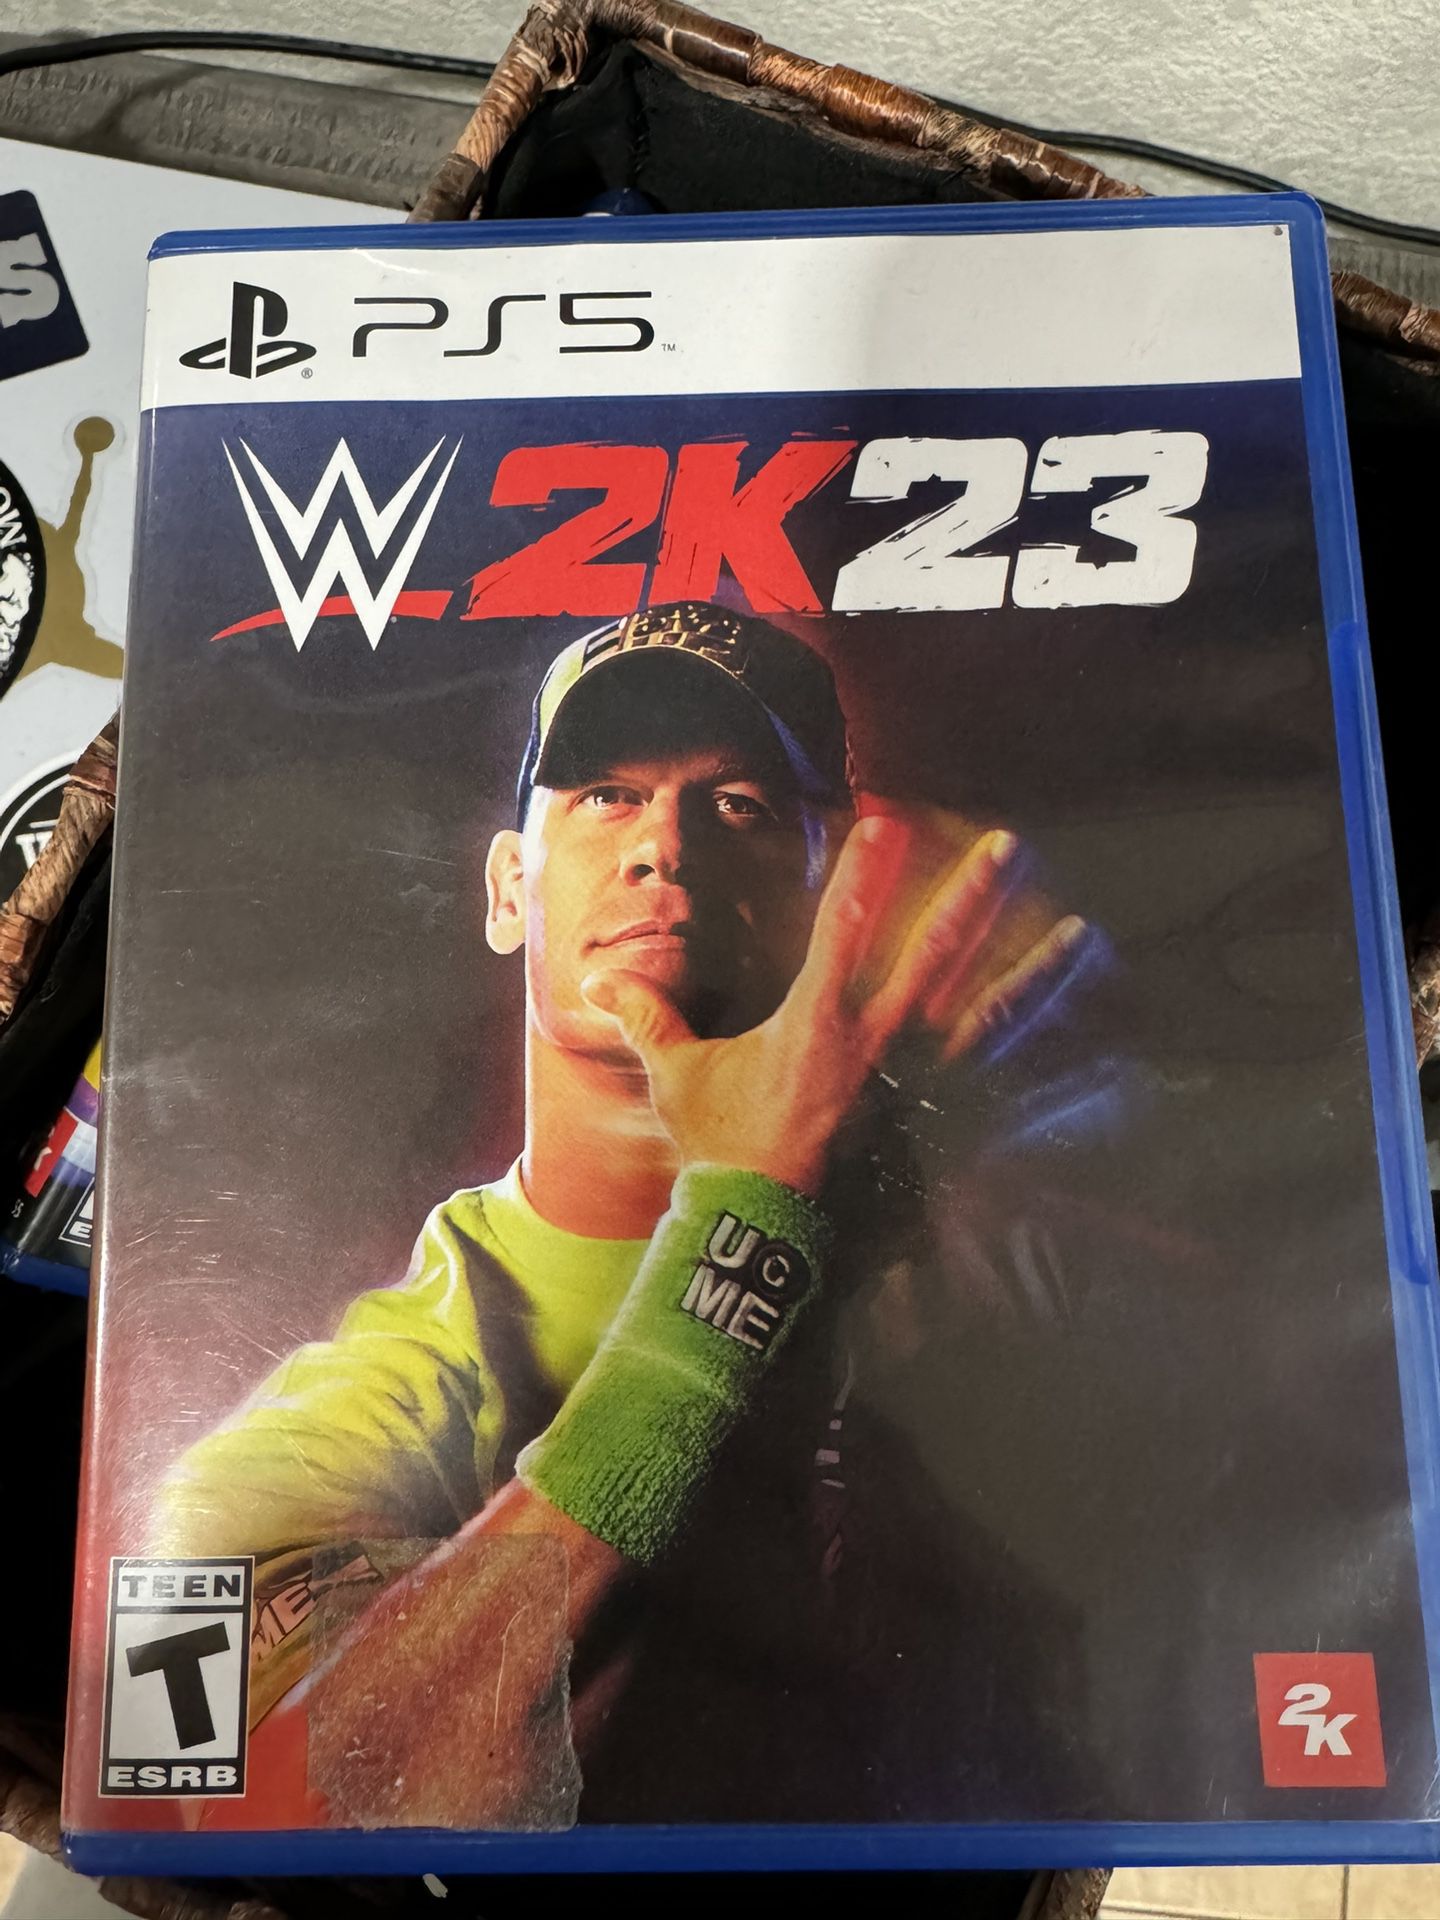 WWE 2k23 - PS5